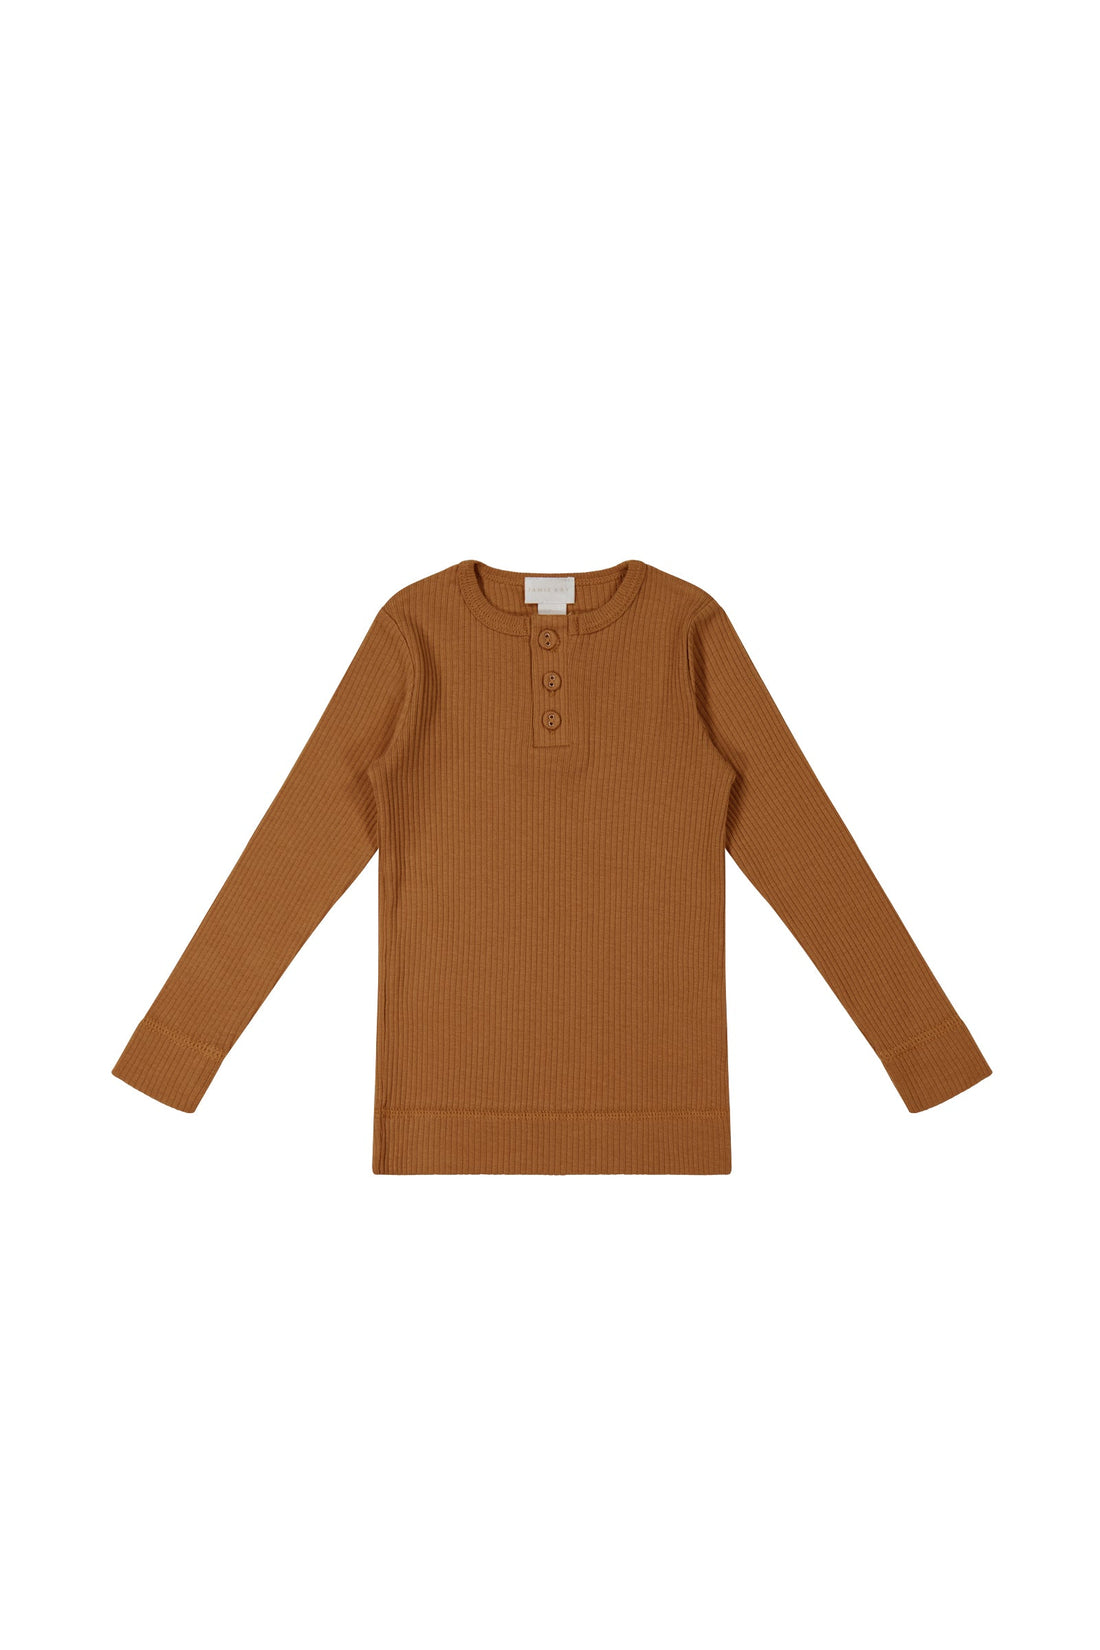 Organic Cotton Modal Long Sleeve Henley - Cinnamon Childrens Top from Jamie Kay USA